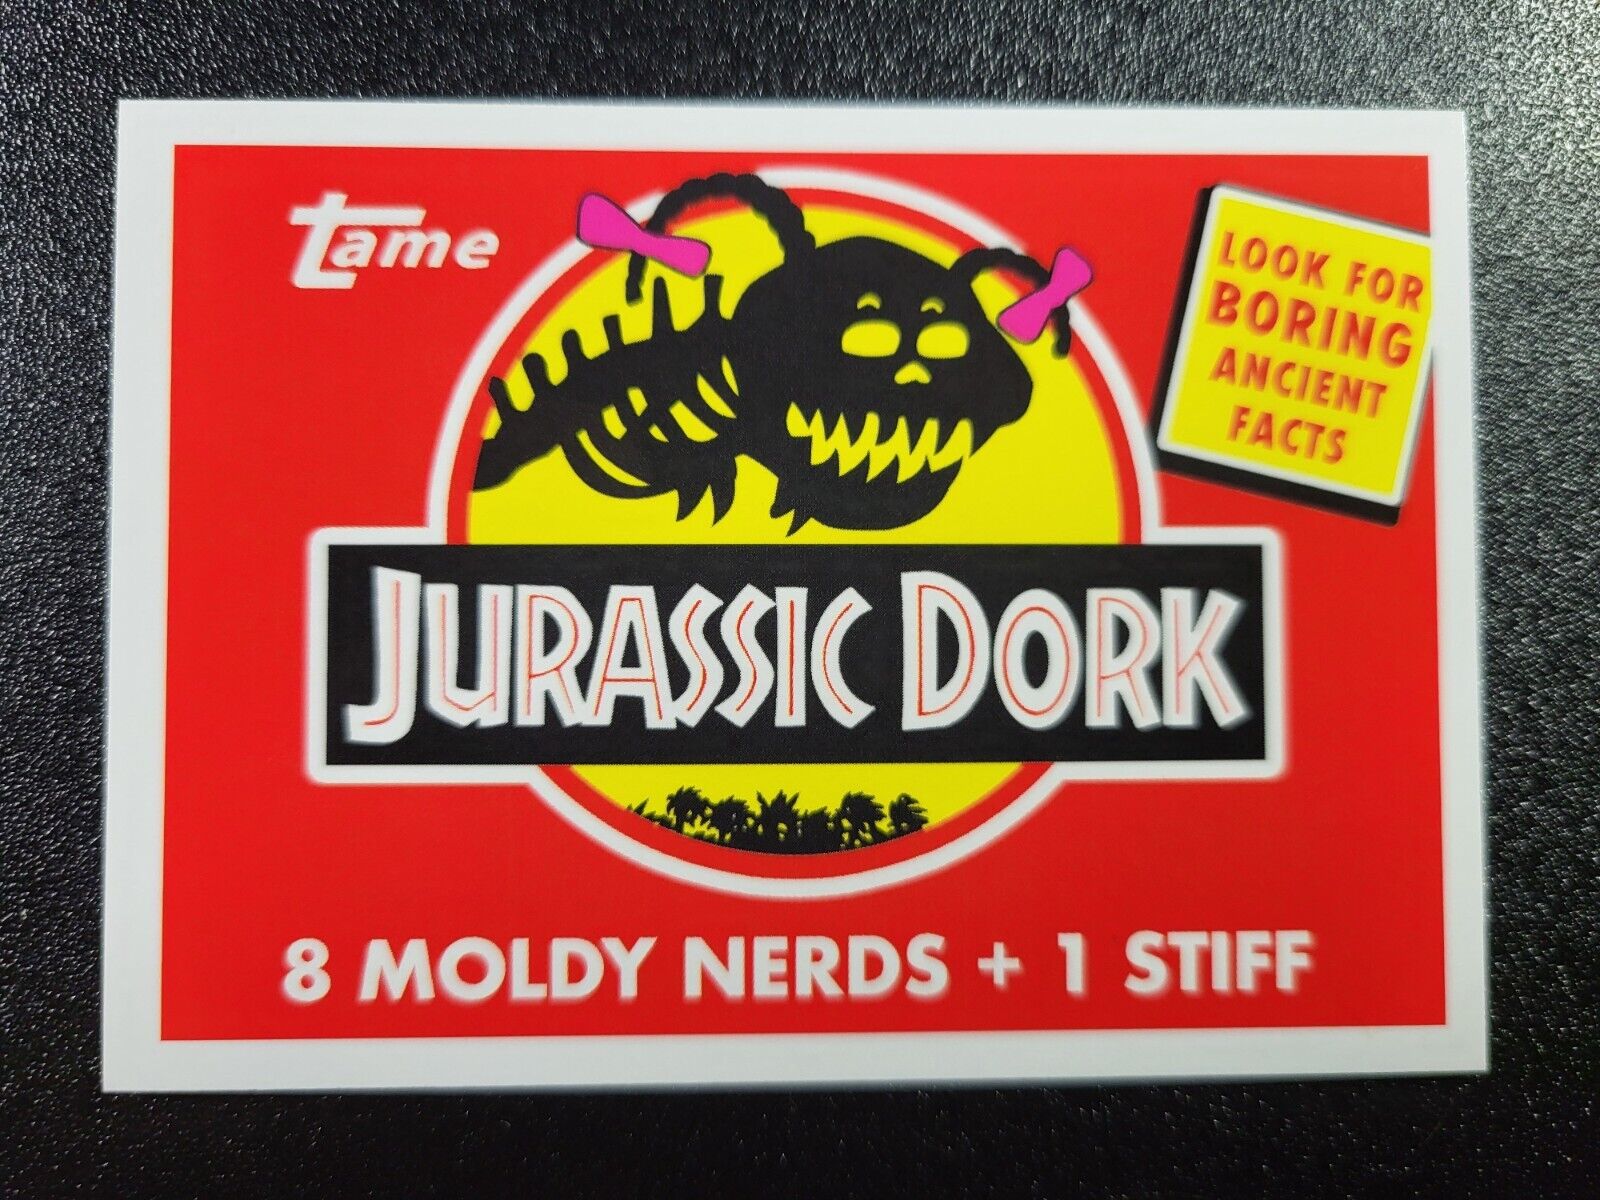 Jurassic Dork 90s Wax Parody Jurassic Park Spoof 2019 Garbage Pail Kids Card